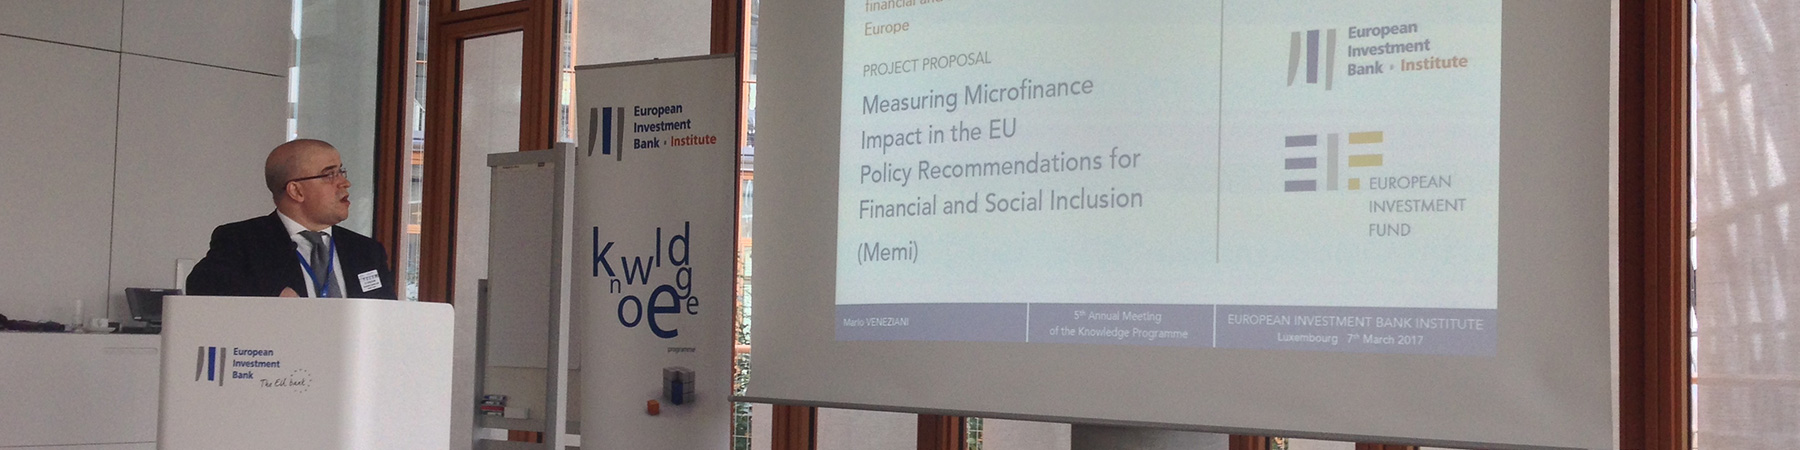 MEMI - Measuring Microfinance Impact in the EU